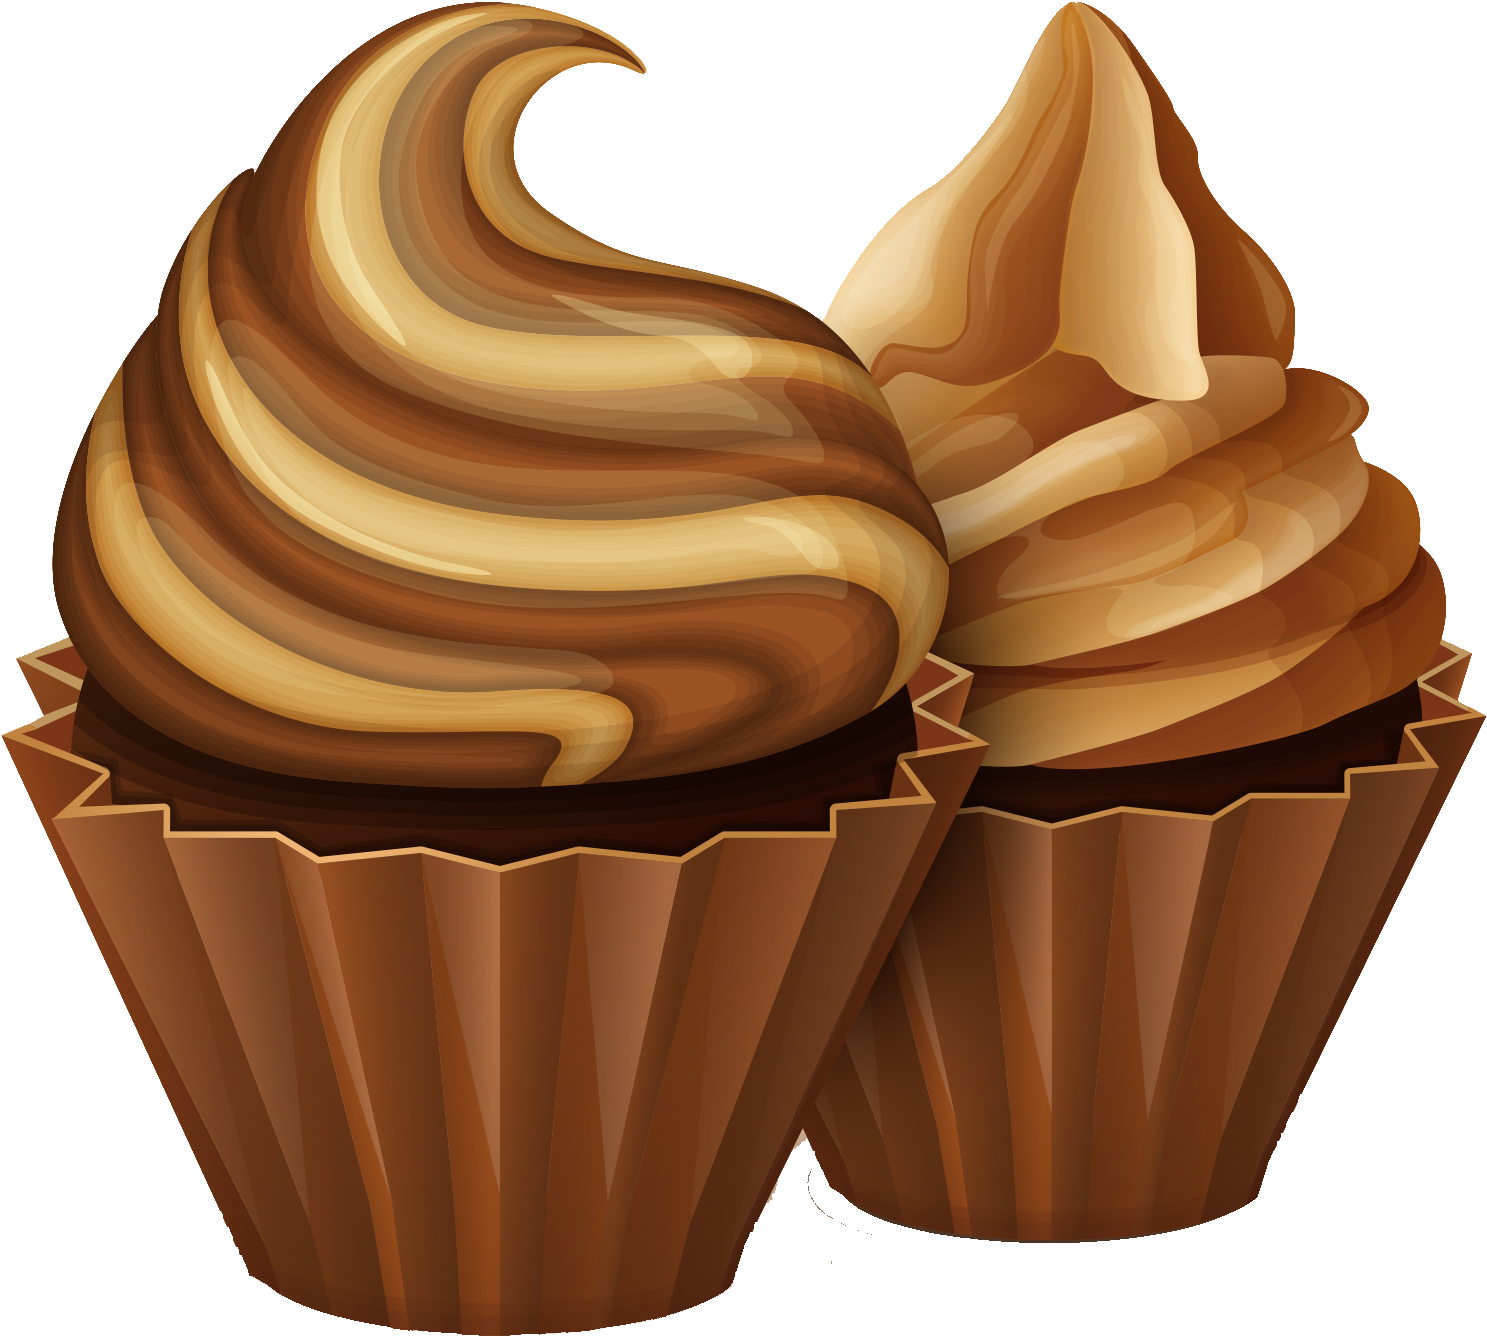 Chocolate Ice Cream Coffee Cupcake Chocolate Cake Cafe - Chocolate Publicidad (2480x3507)